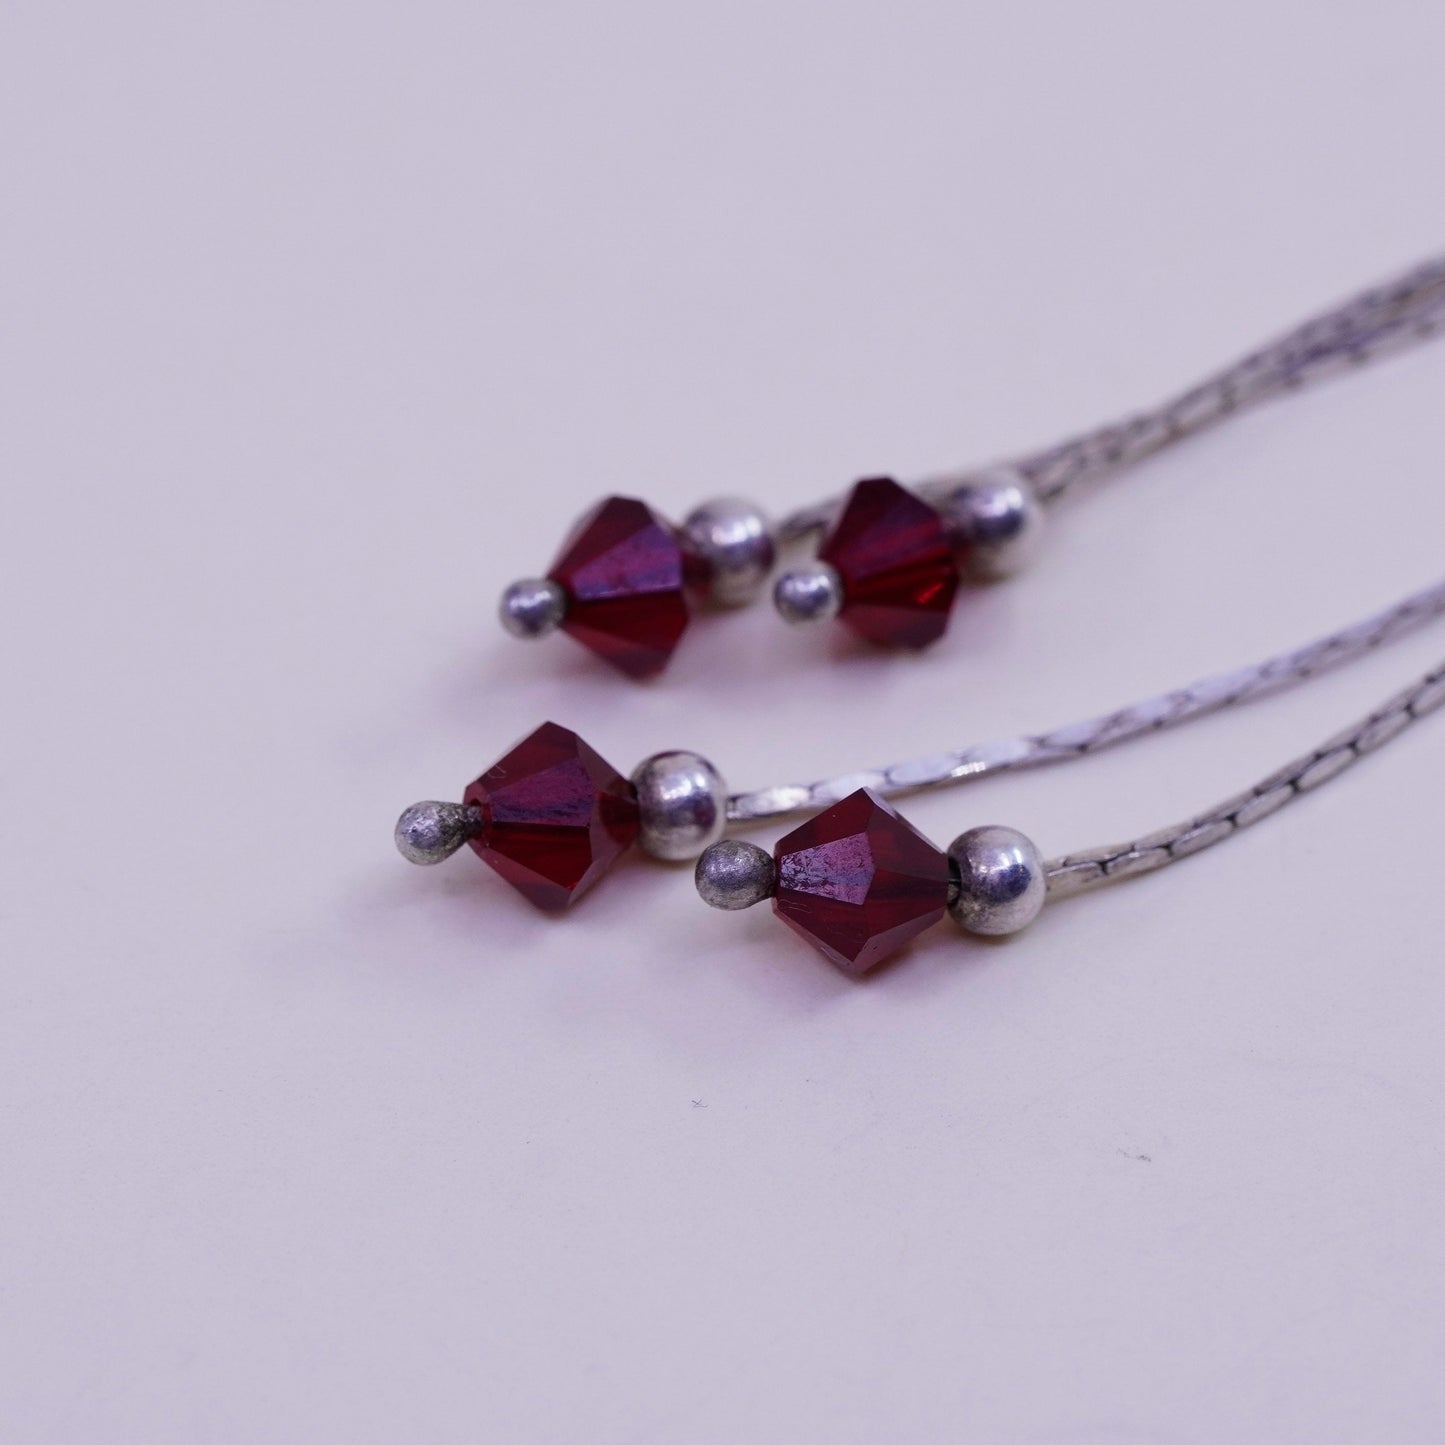 Vintage sterling silver handmade earrings, 925 fringe with ruby crystal beads